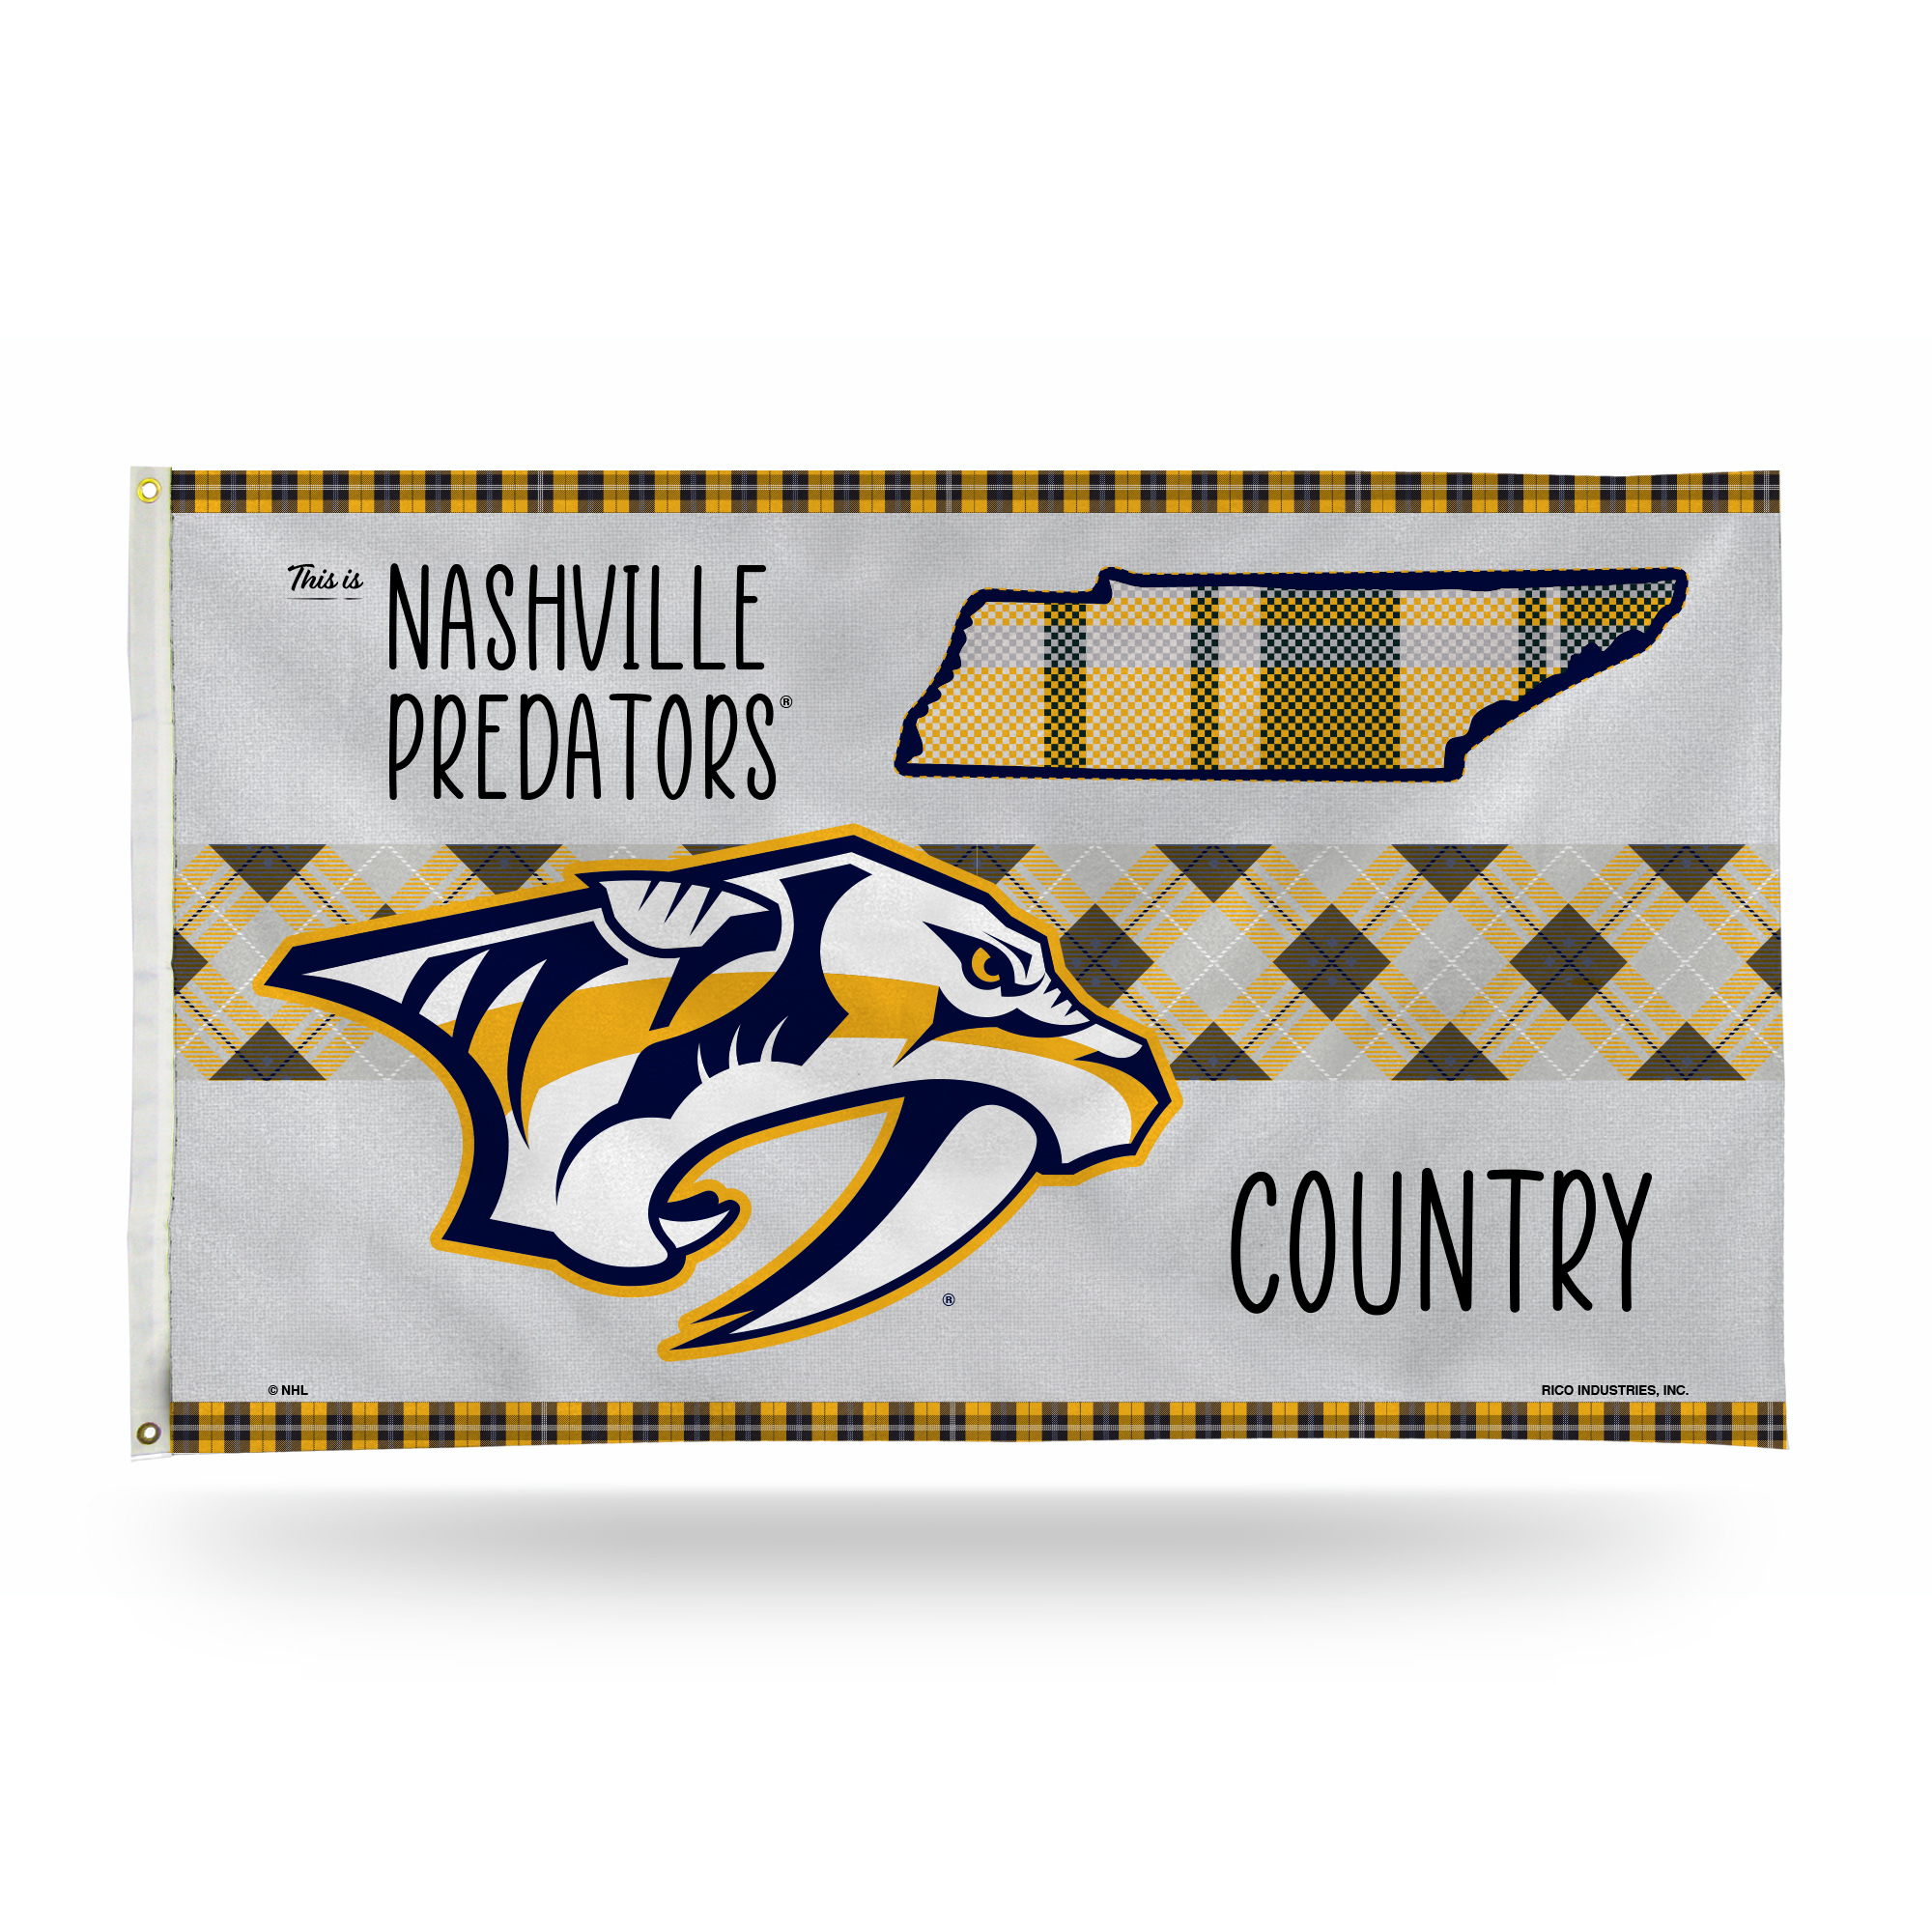 Rico NHL Rico Industries Nashville Predators This is Predators Country - Plaid Design 3' x 5' Banner Flag